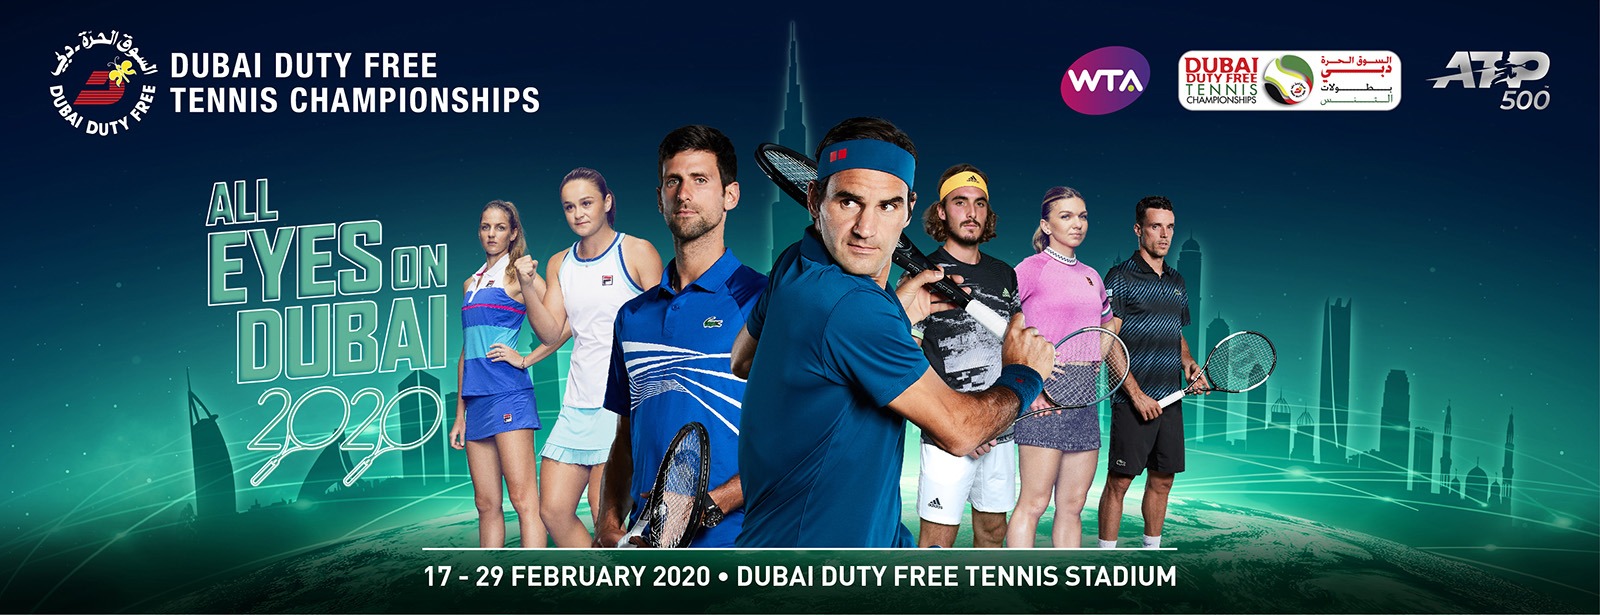 Dubai Duty Free Tennis Championships 2020 - Coming Soon in UAE